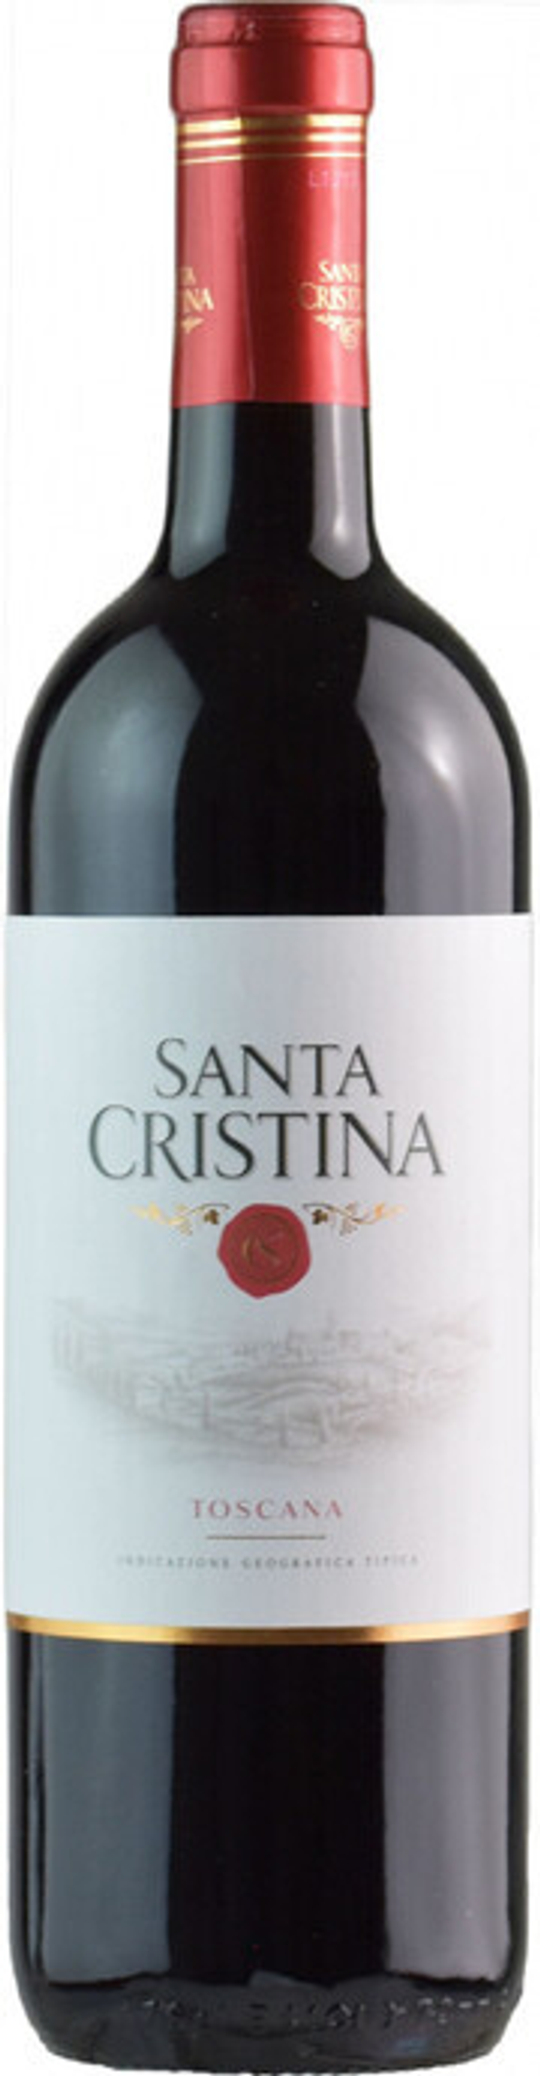 Вино Santa Cristina Toscana IGT, 0,75 л.